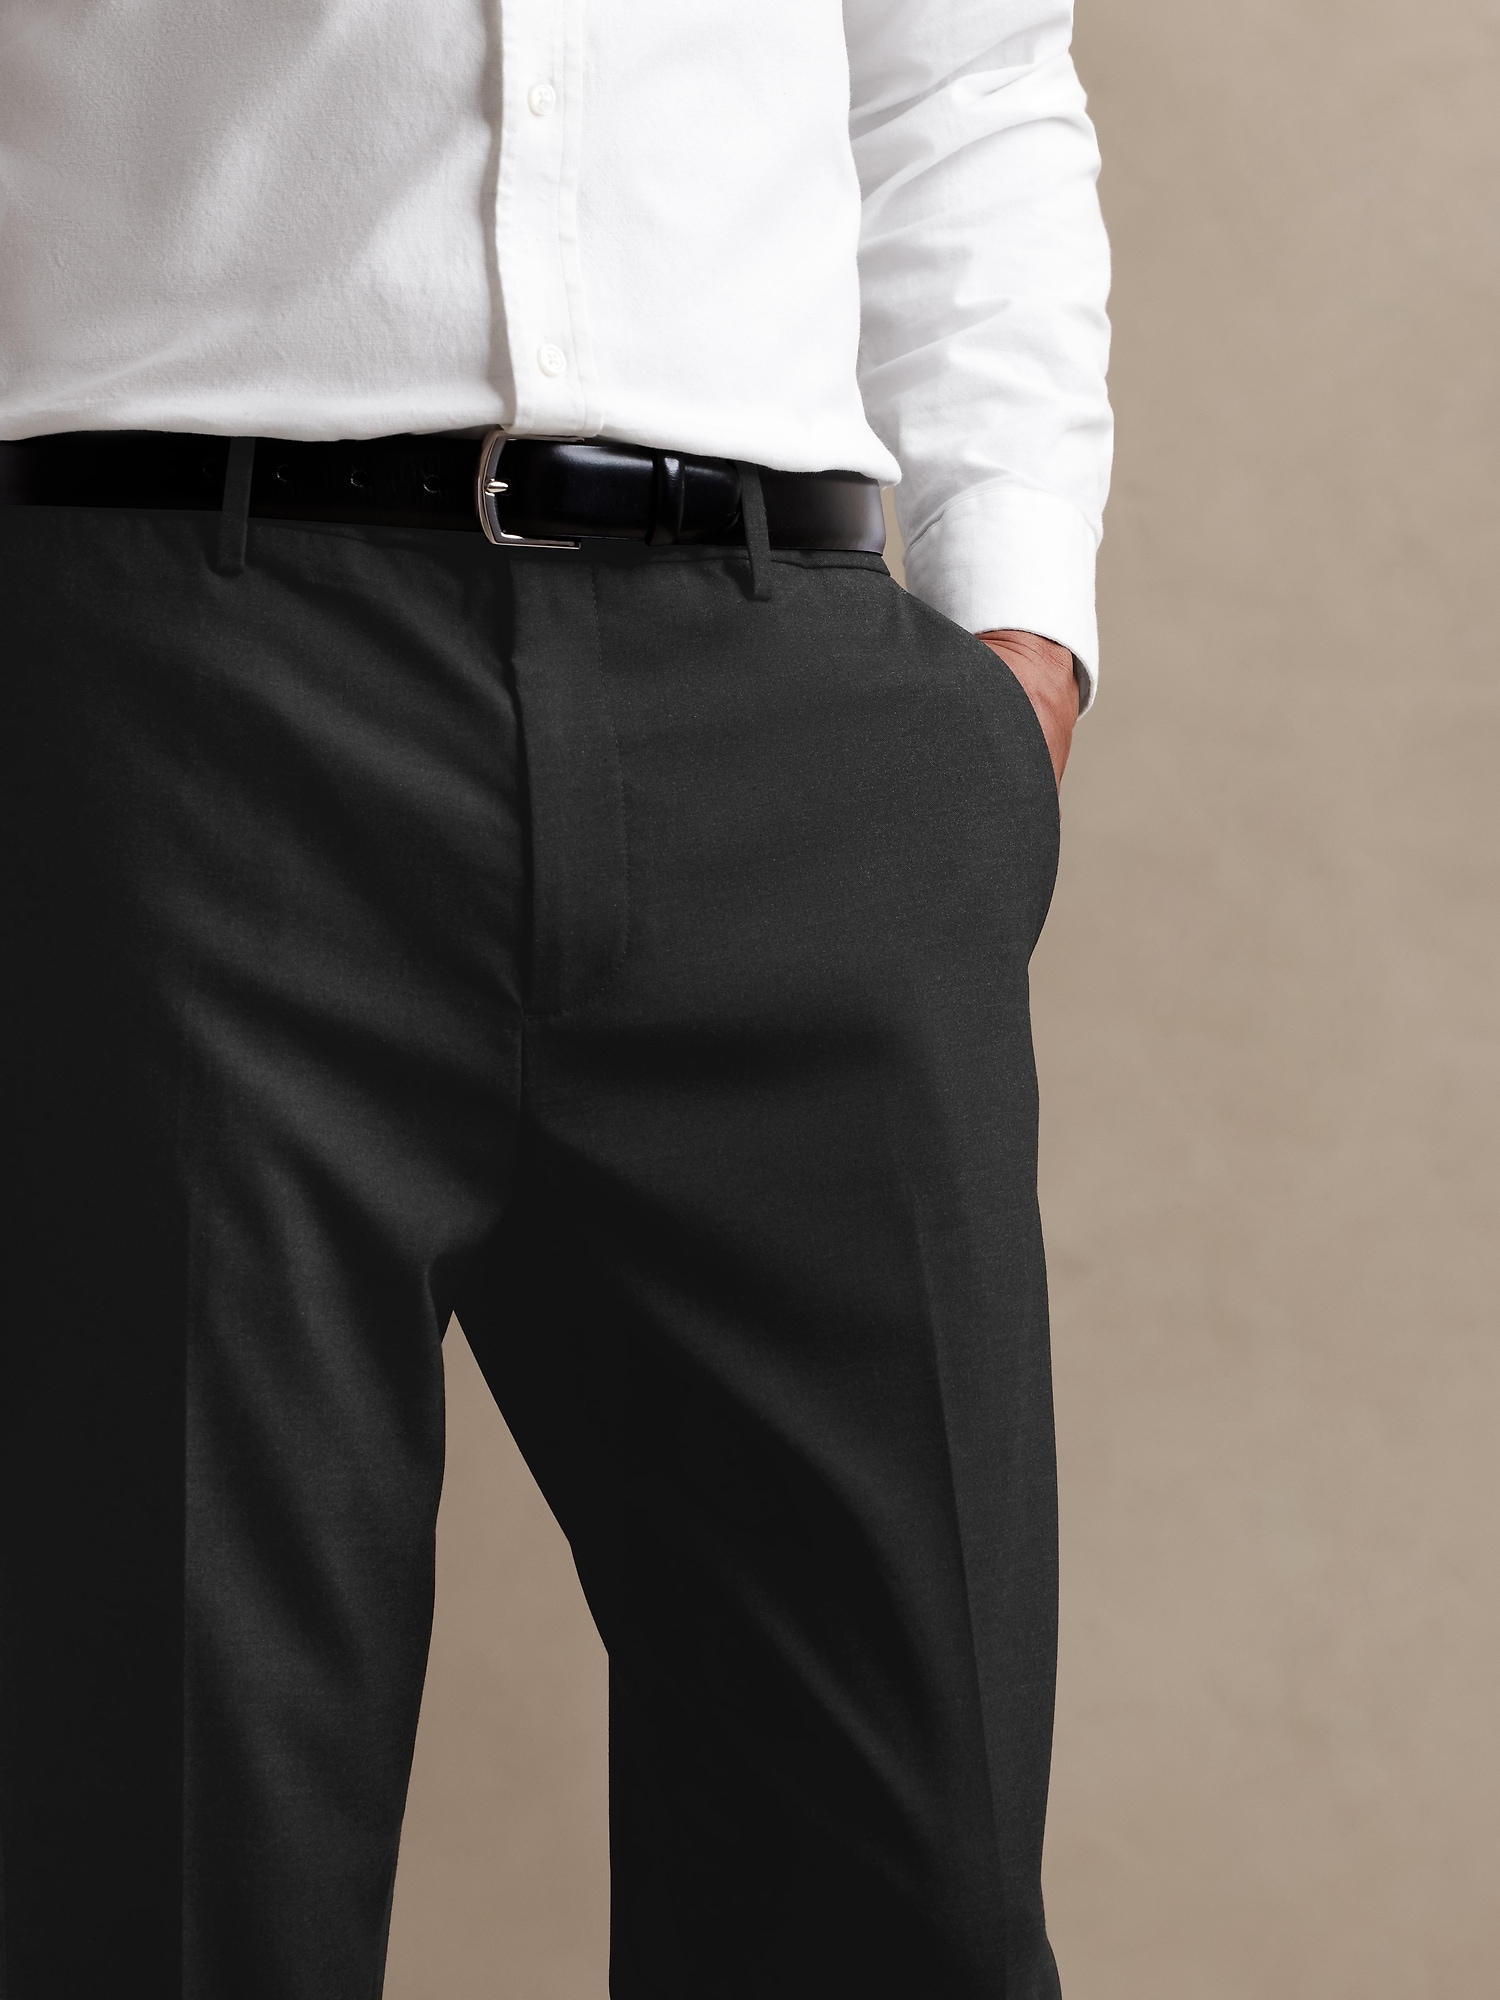 fcity.in - Elanhood Black Grey Formal Trouser Pack Of 2pcs / Stylish Modern  Men